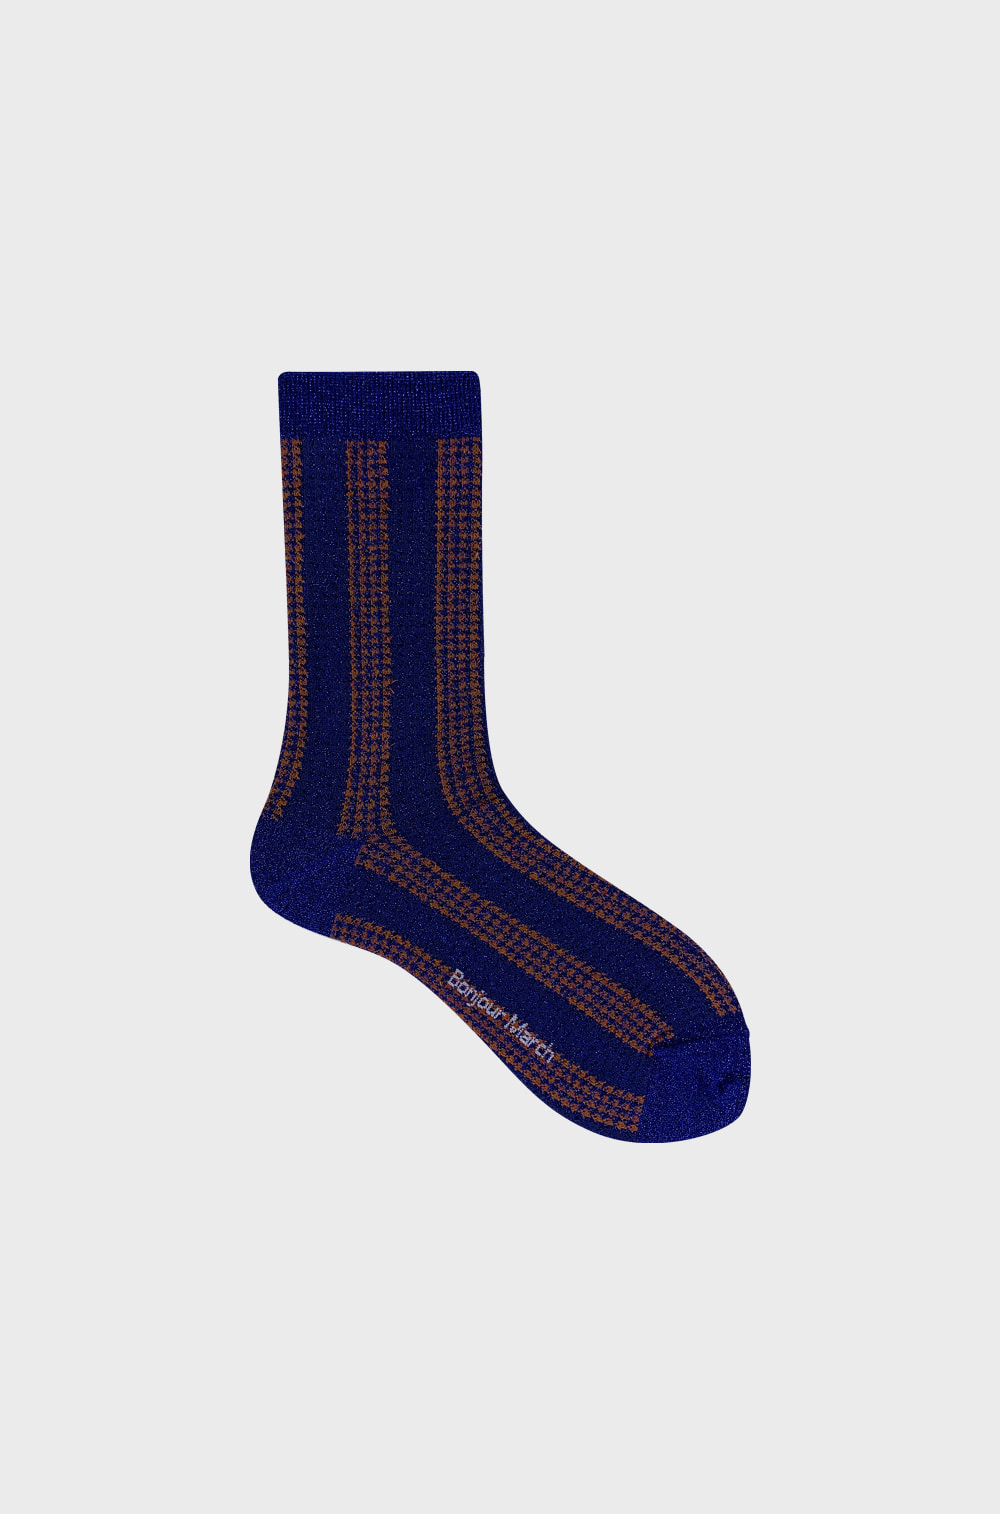 Sapphire socks